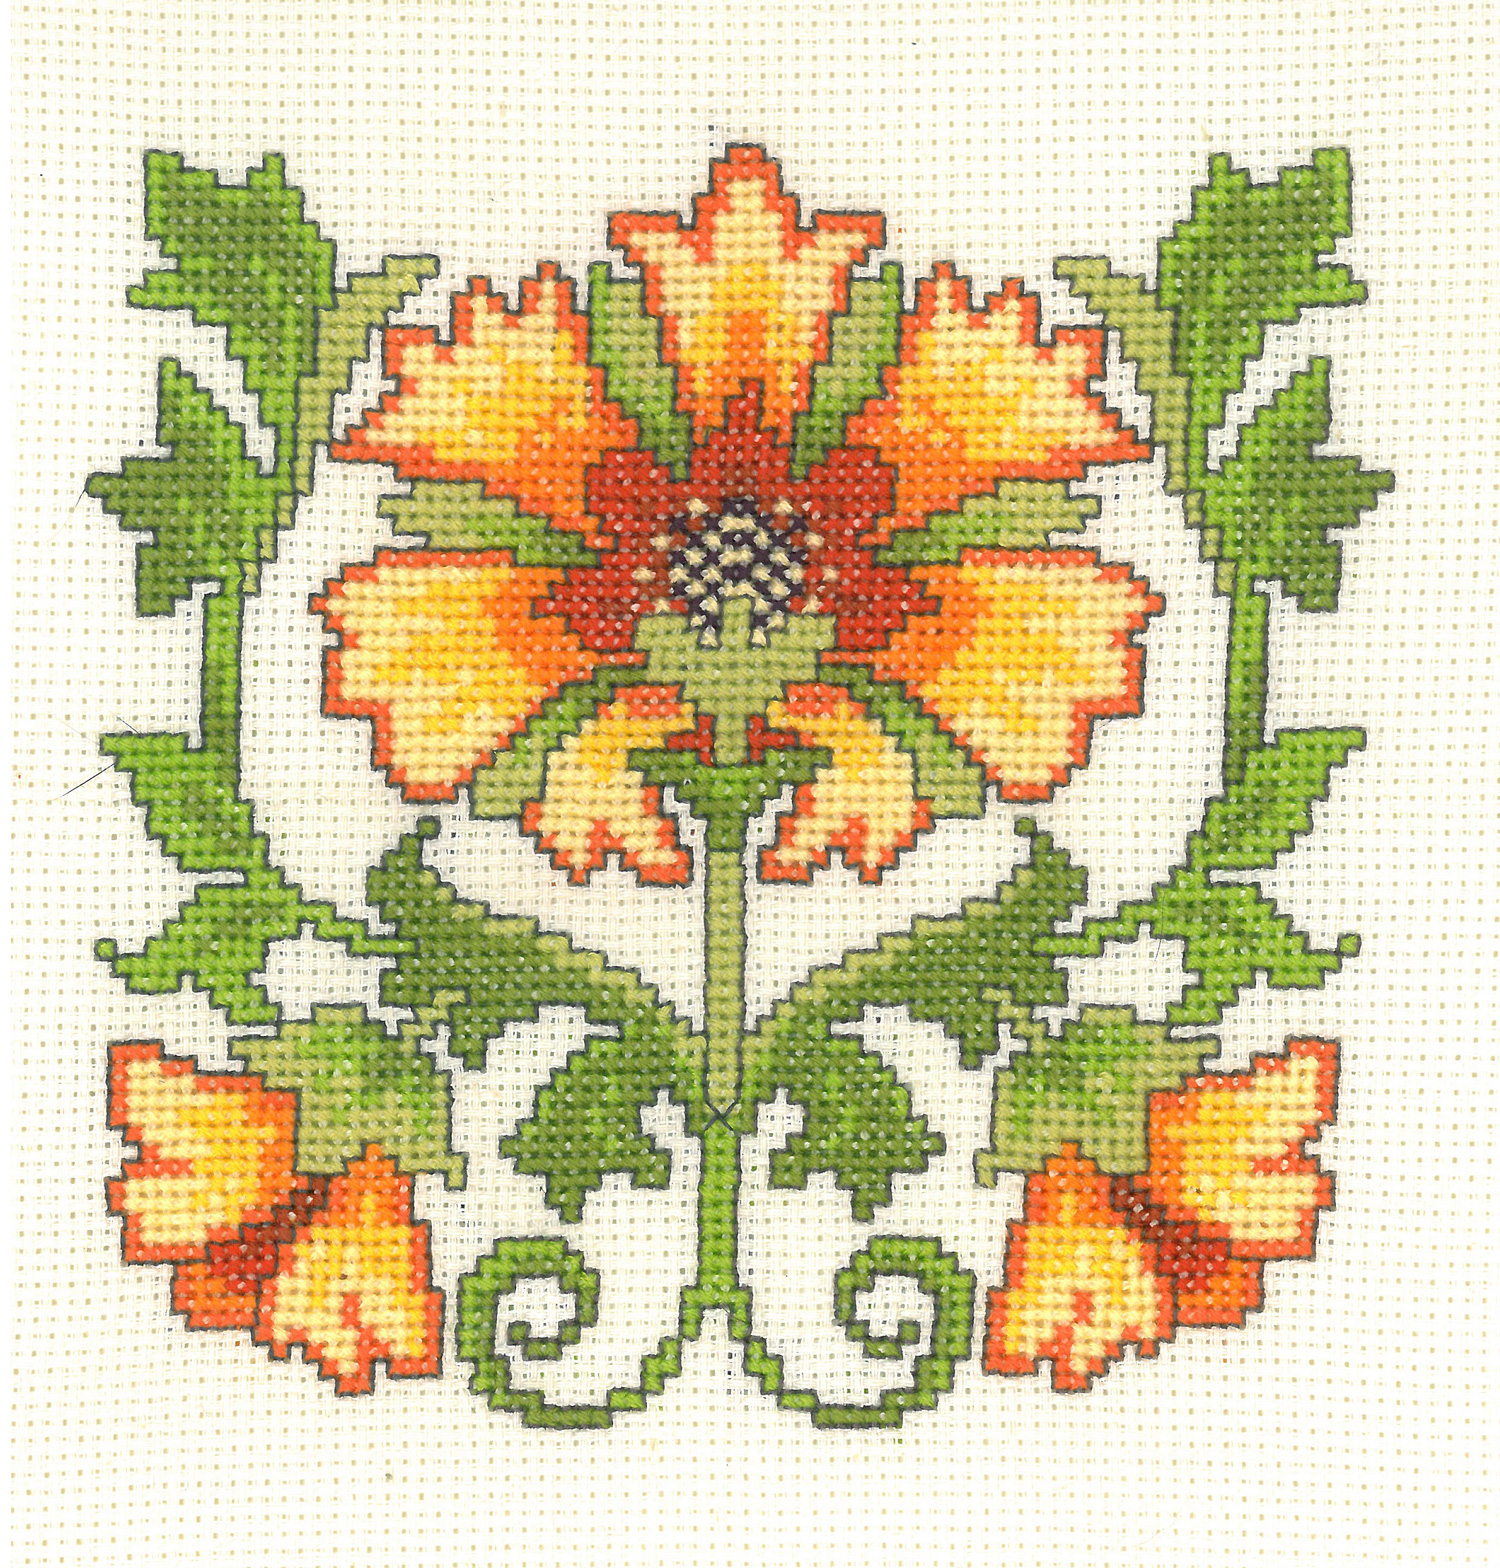 Lesley Teare - Art Nouveau Sunflower